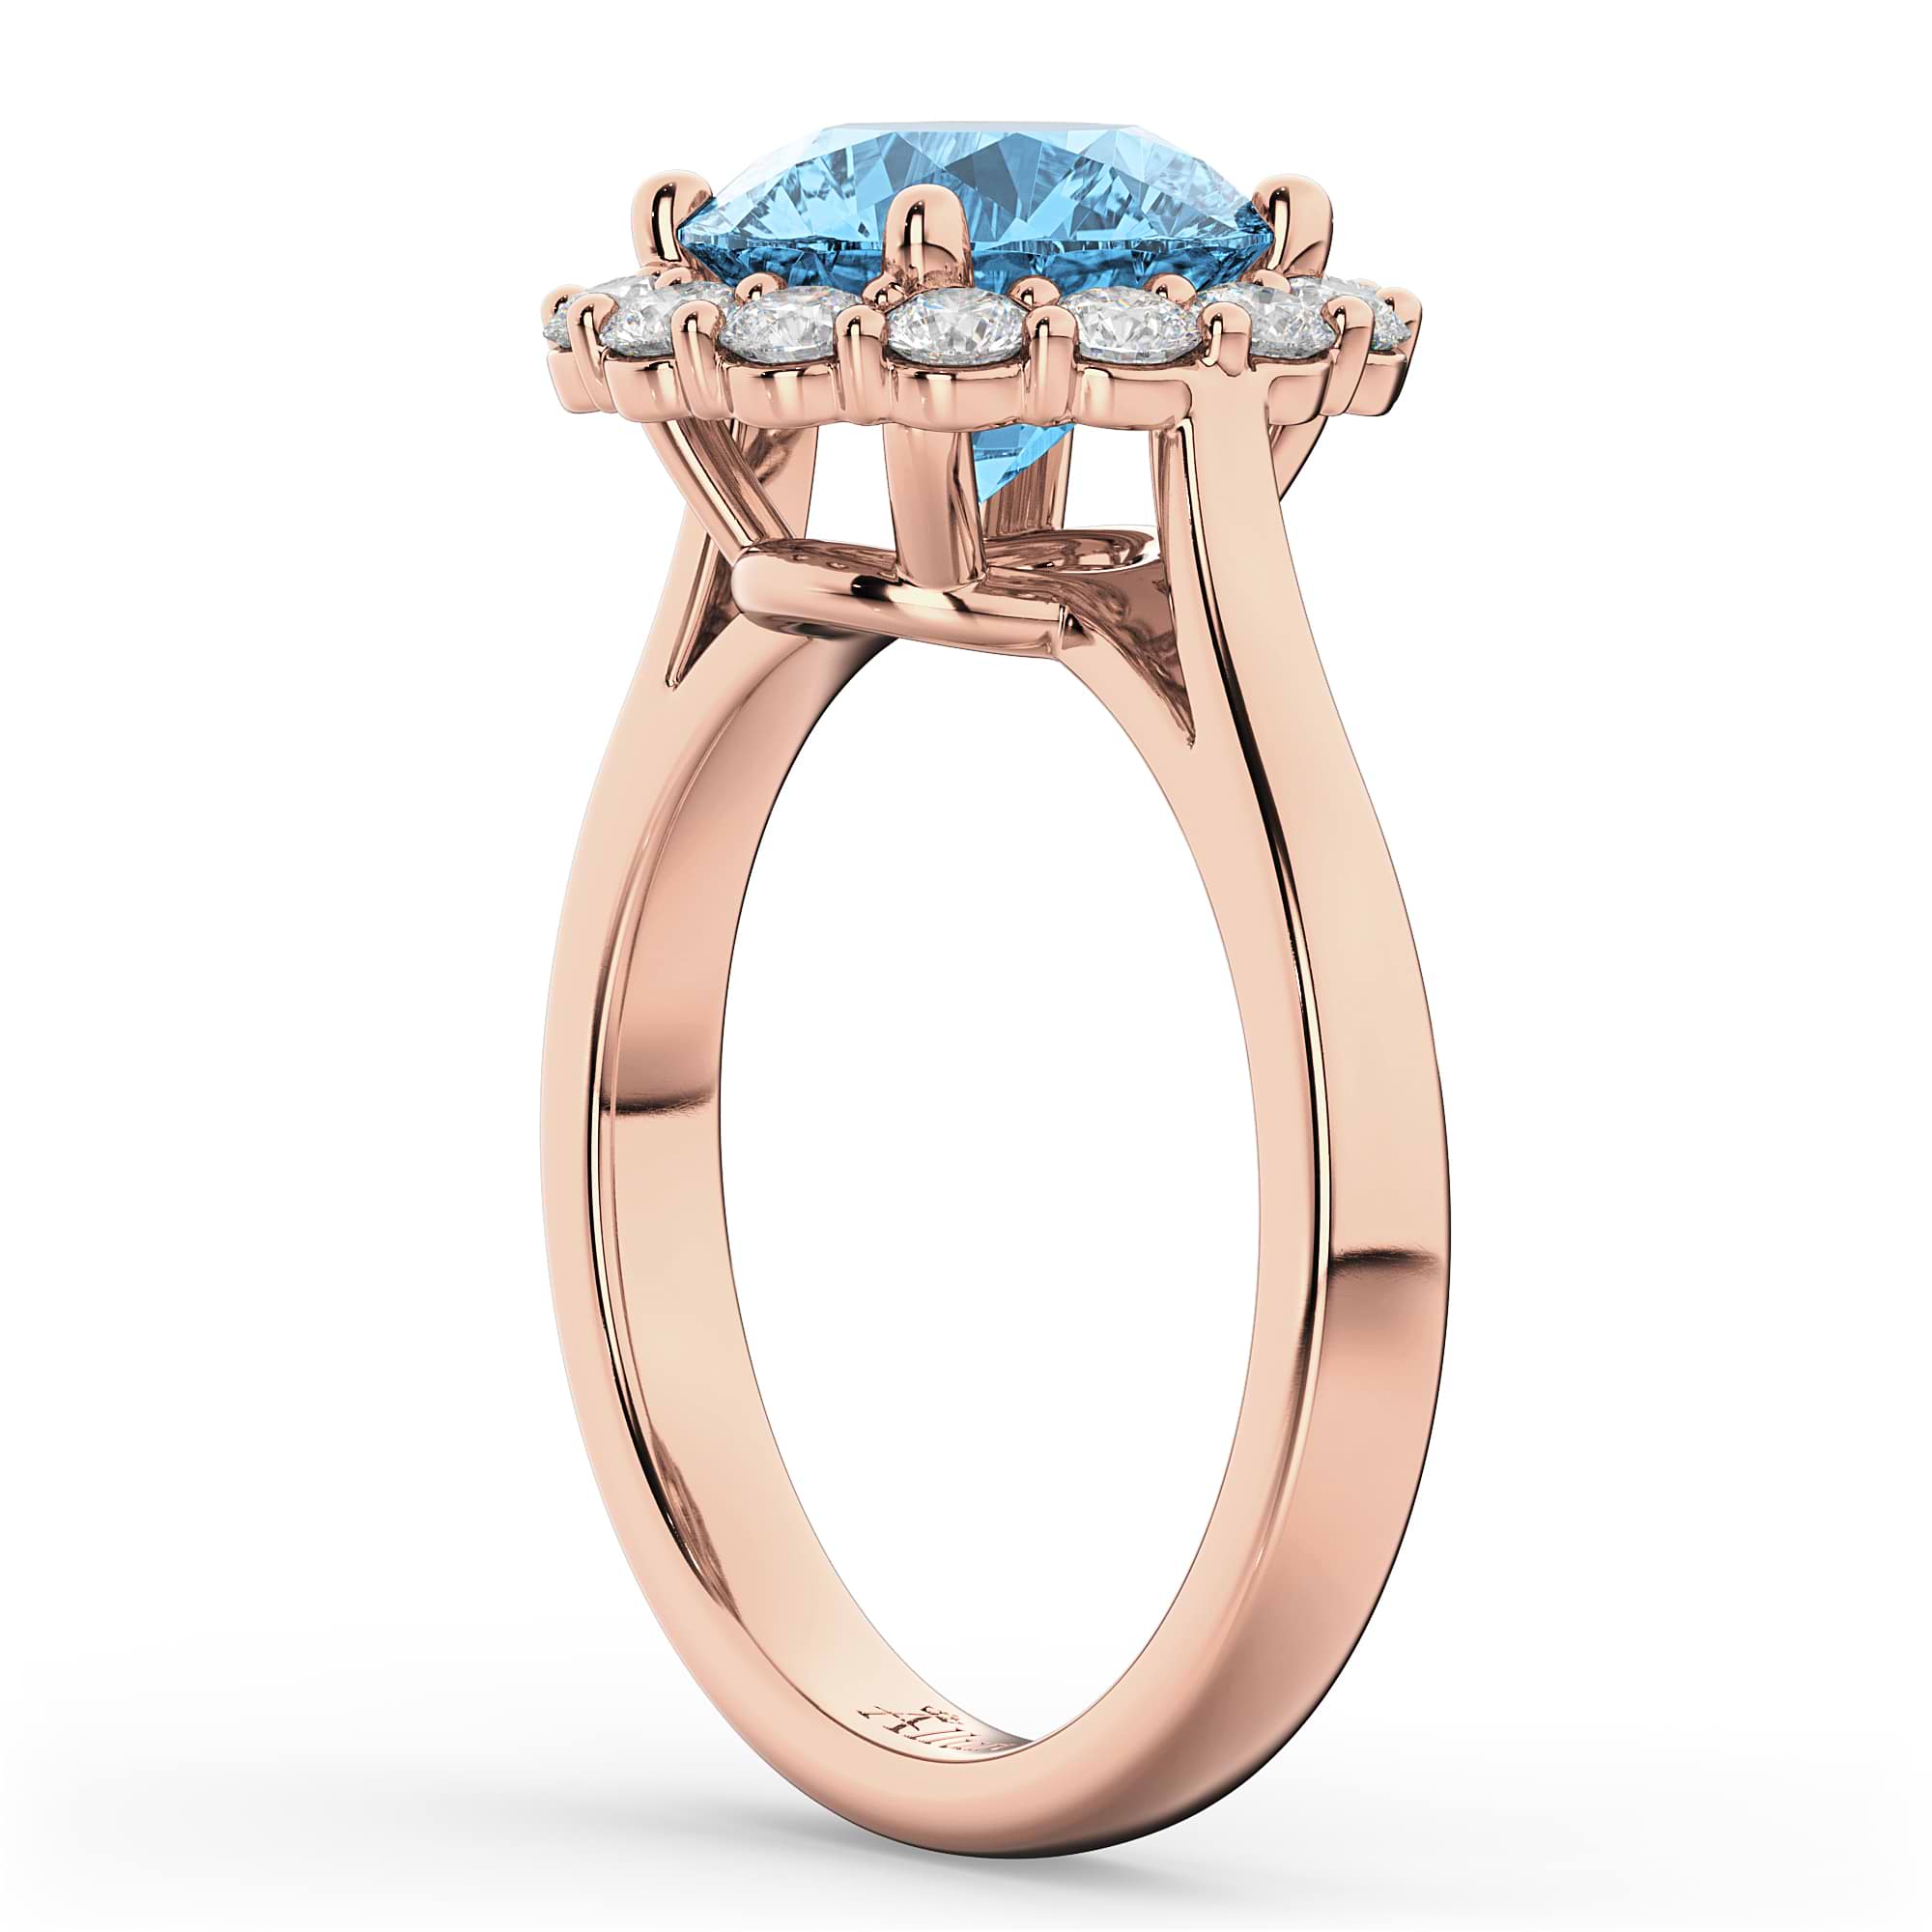 Halo Round Blue Topaz & Diamond Engagement Ring 14K Rose Gold 4.45ct